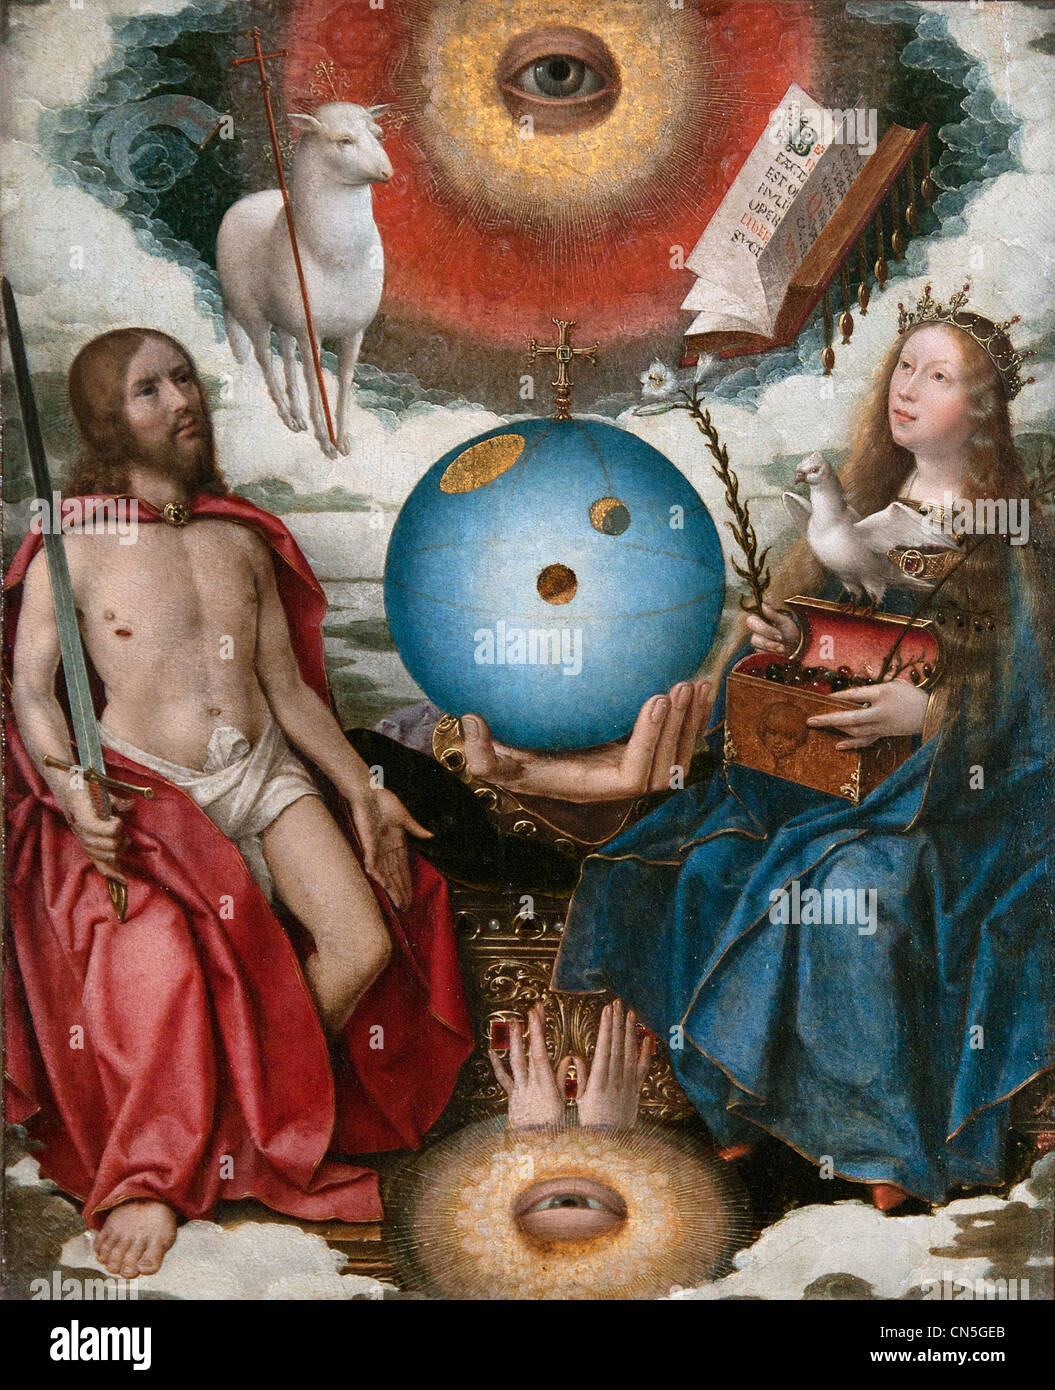 Allegoria cristiana di Jan Provost 1465 - 1529 Belgio belga Foto Stock